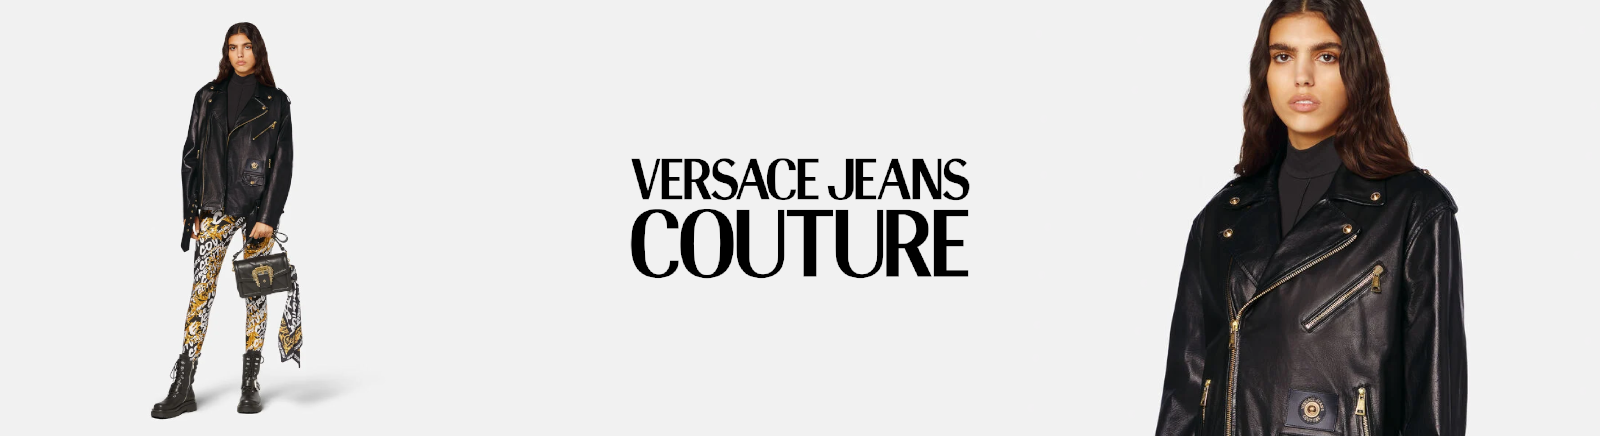 Versace Jeans Damenschuhe online bestellen im Prange Schuhe Shop